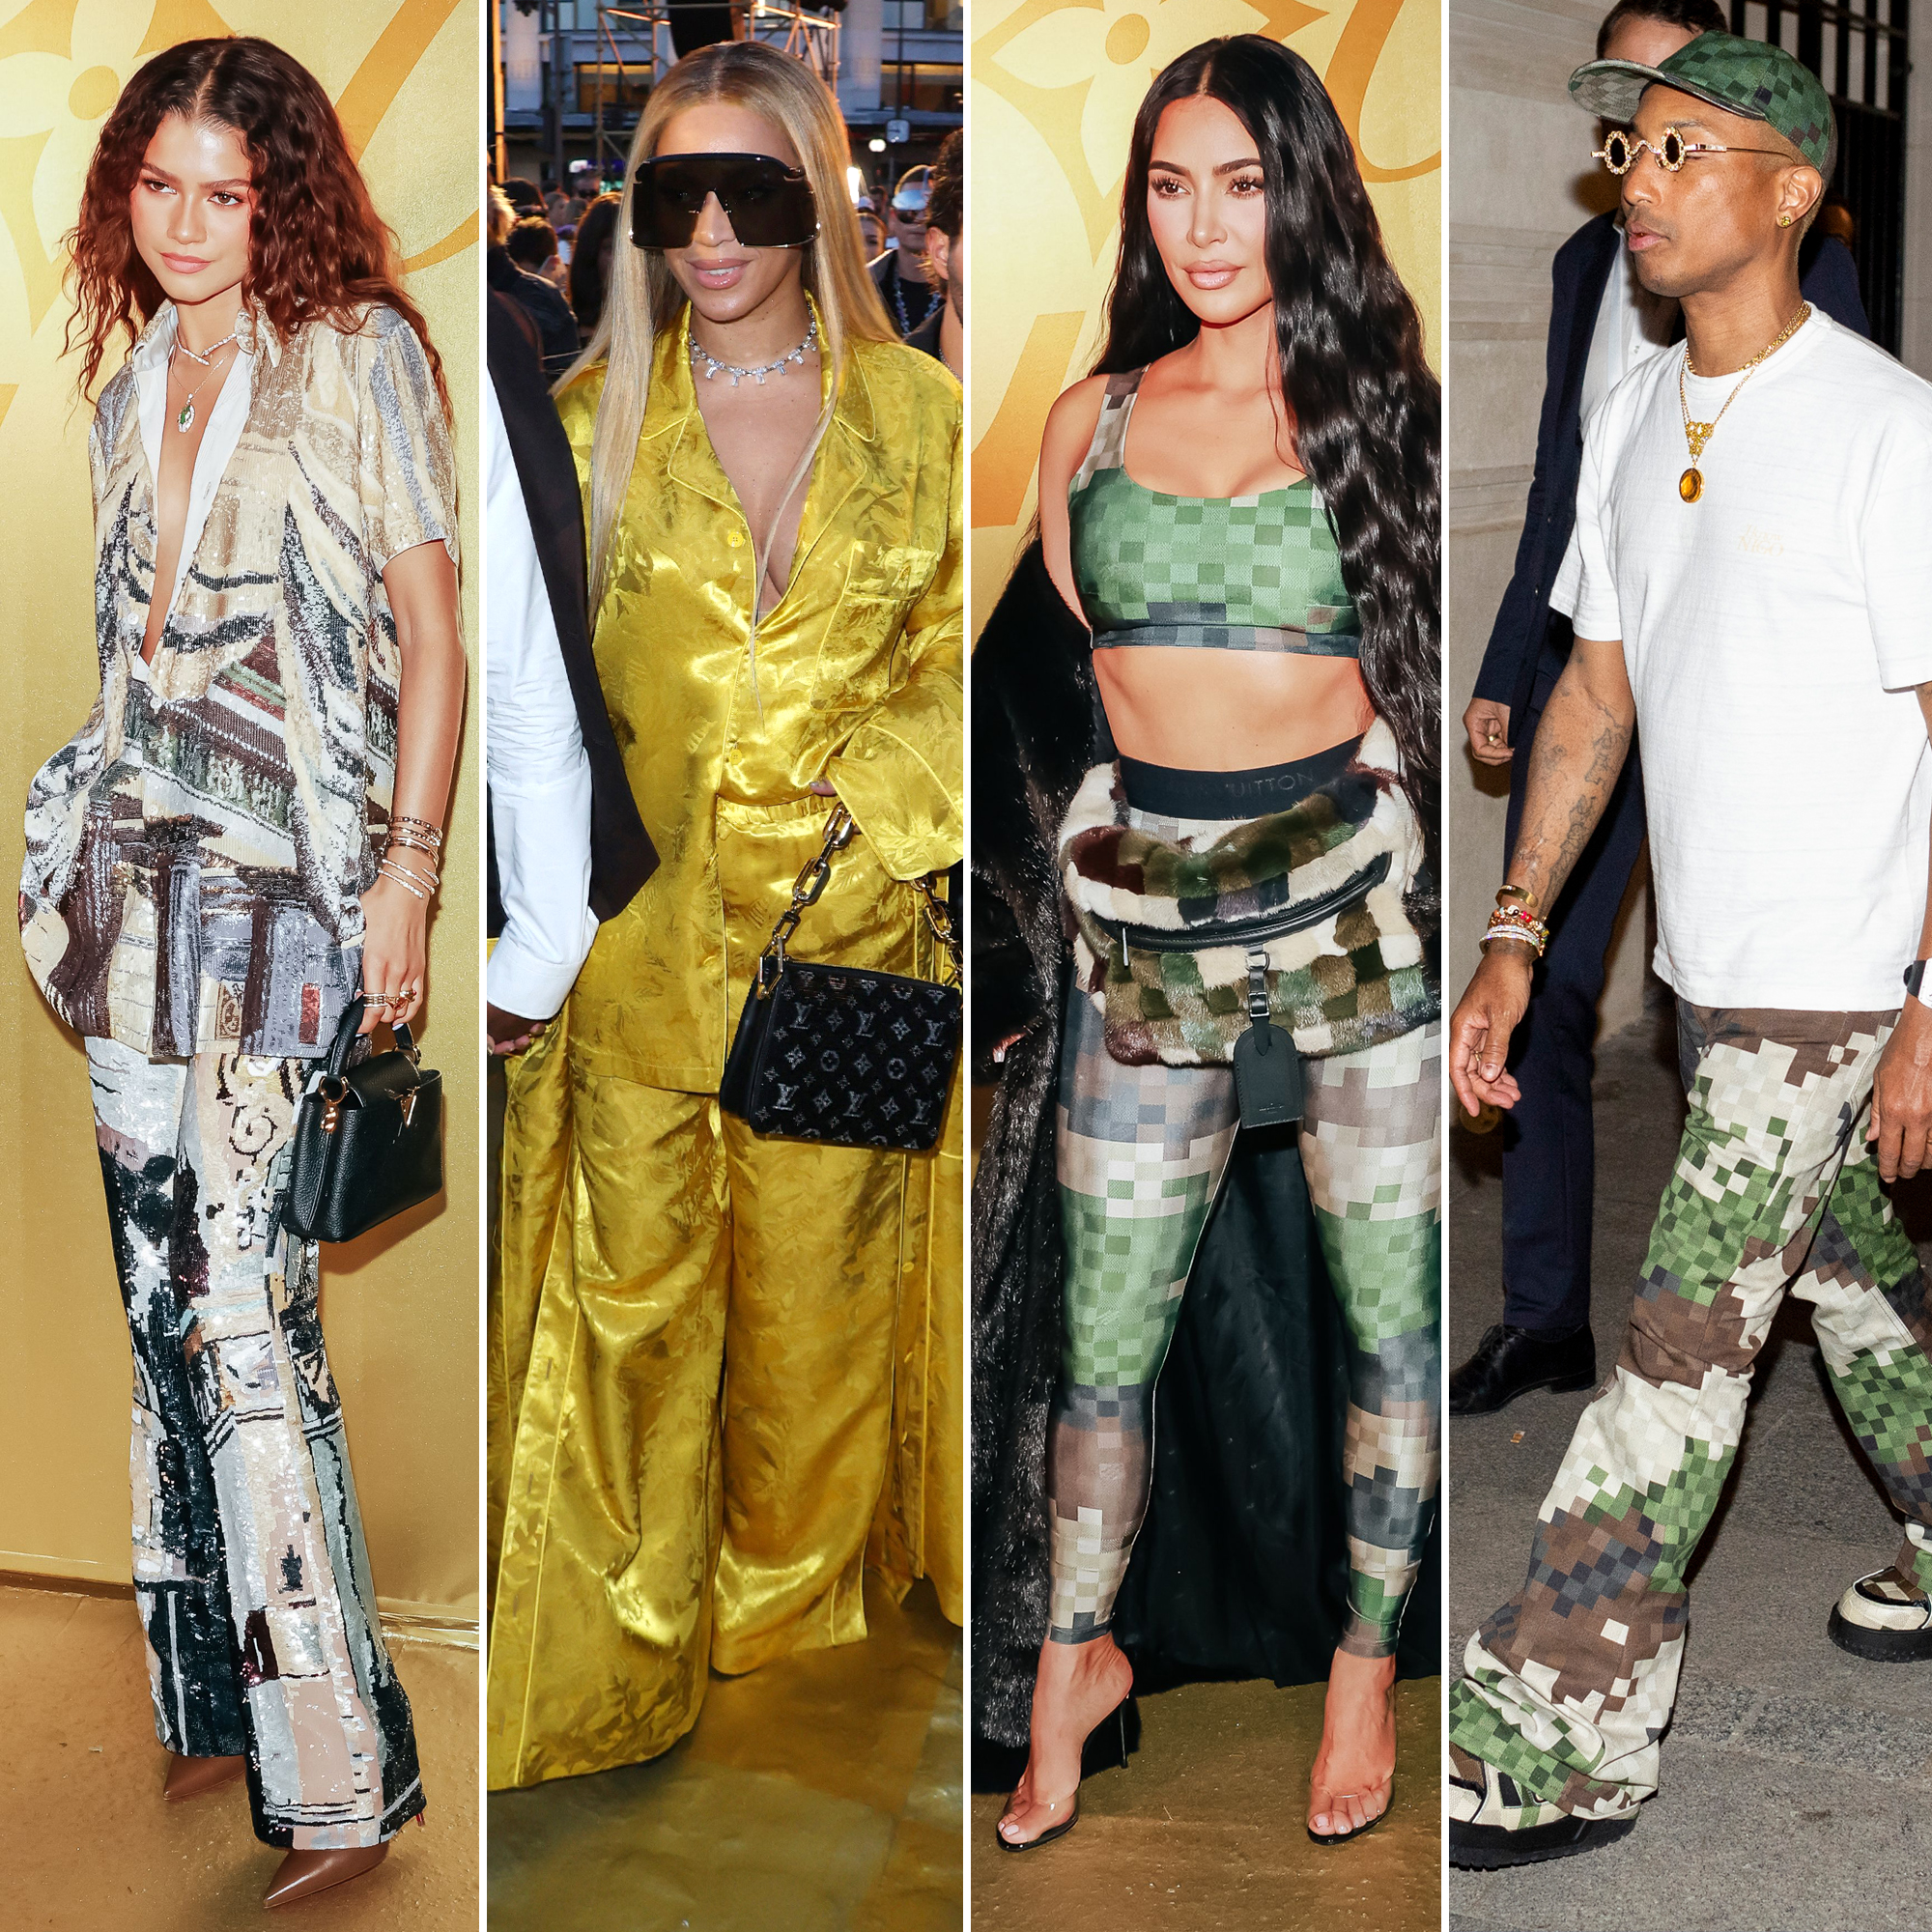 Rihannas Baby Bump Makes Its HighFashion Debut in Louis Vuitton Campaign